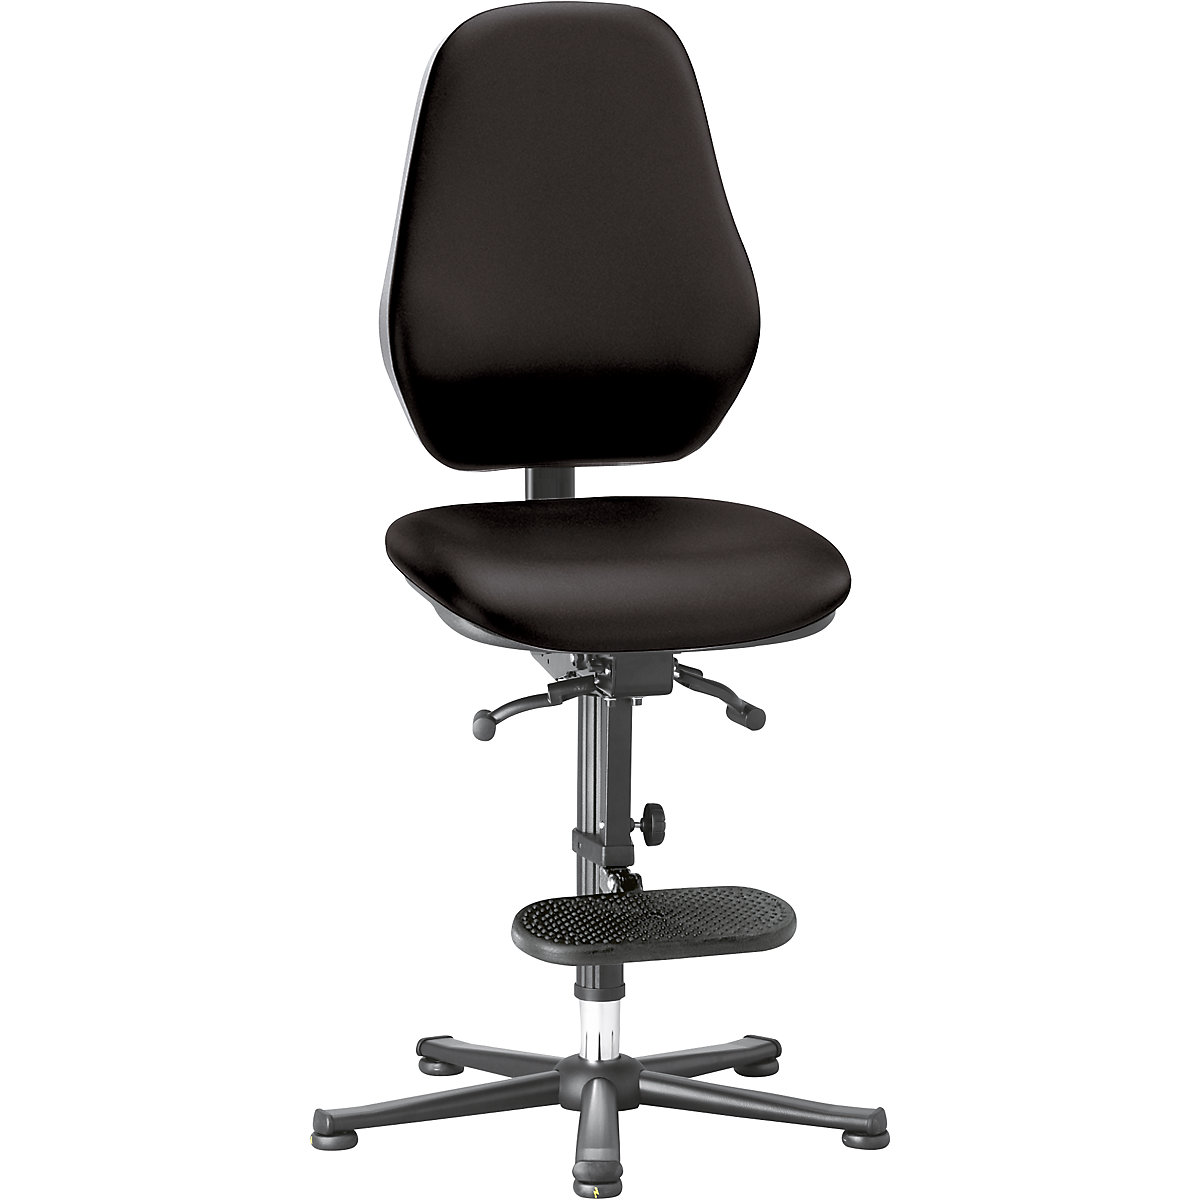 Pracovní otočná židle – bimos, s ochranou ESD, se synchronní mechanikou a regulací hmotnosti, patky, pomůcka pro výstup, černý koženkový potah-14